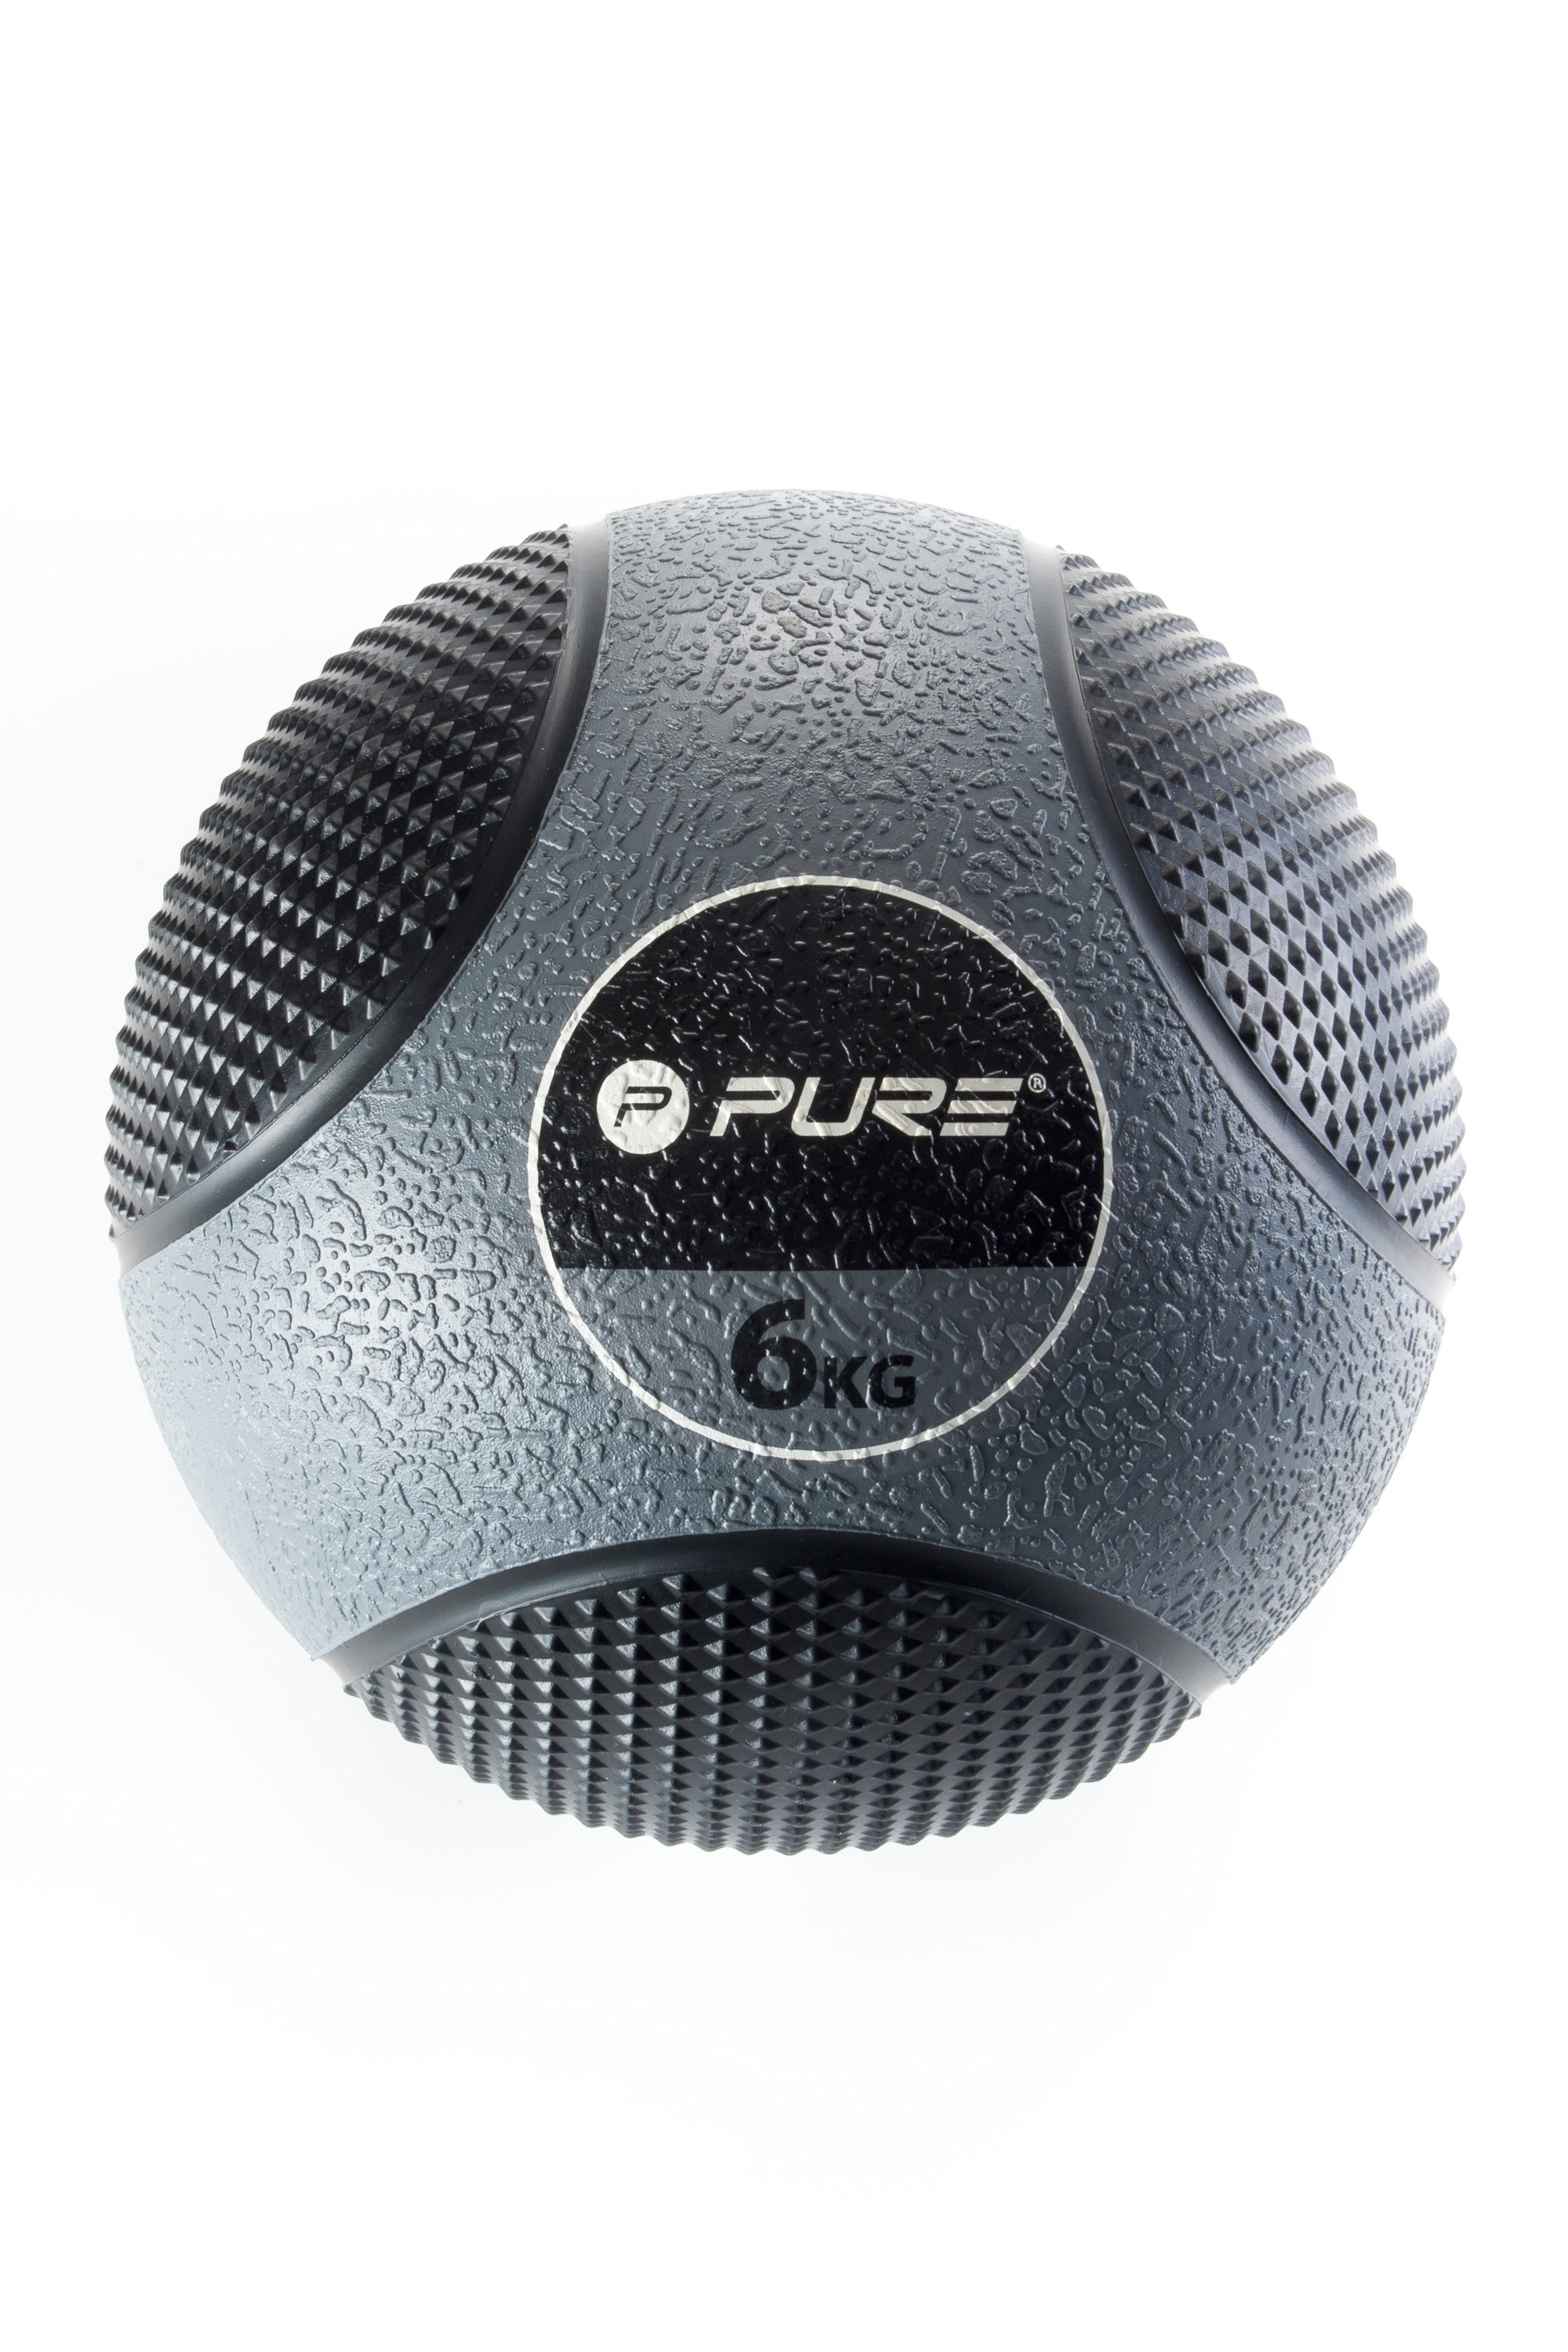 Medicine ball Pure2Improve 2Kg - Medecine balls - Bodybuilding